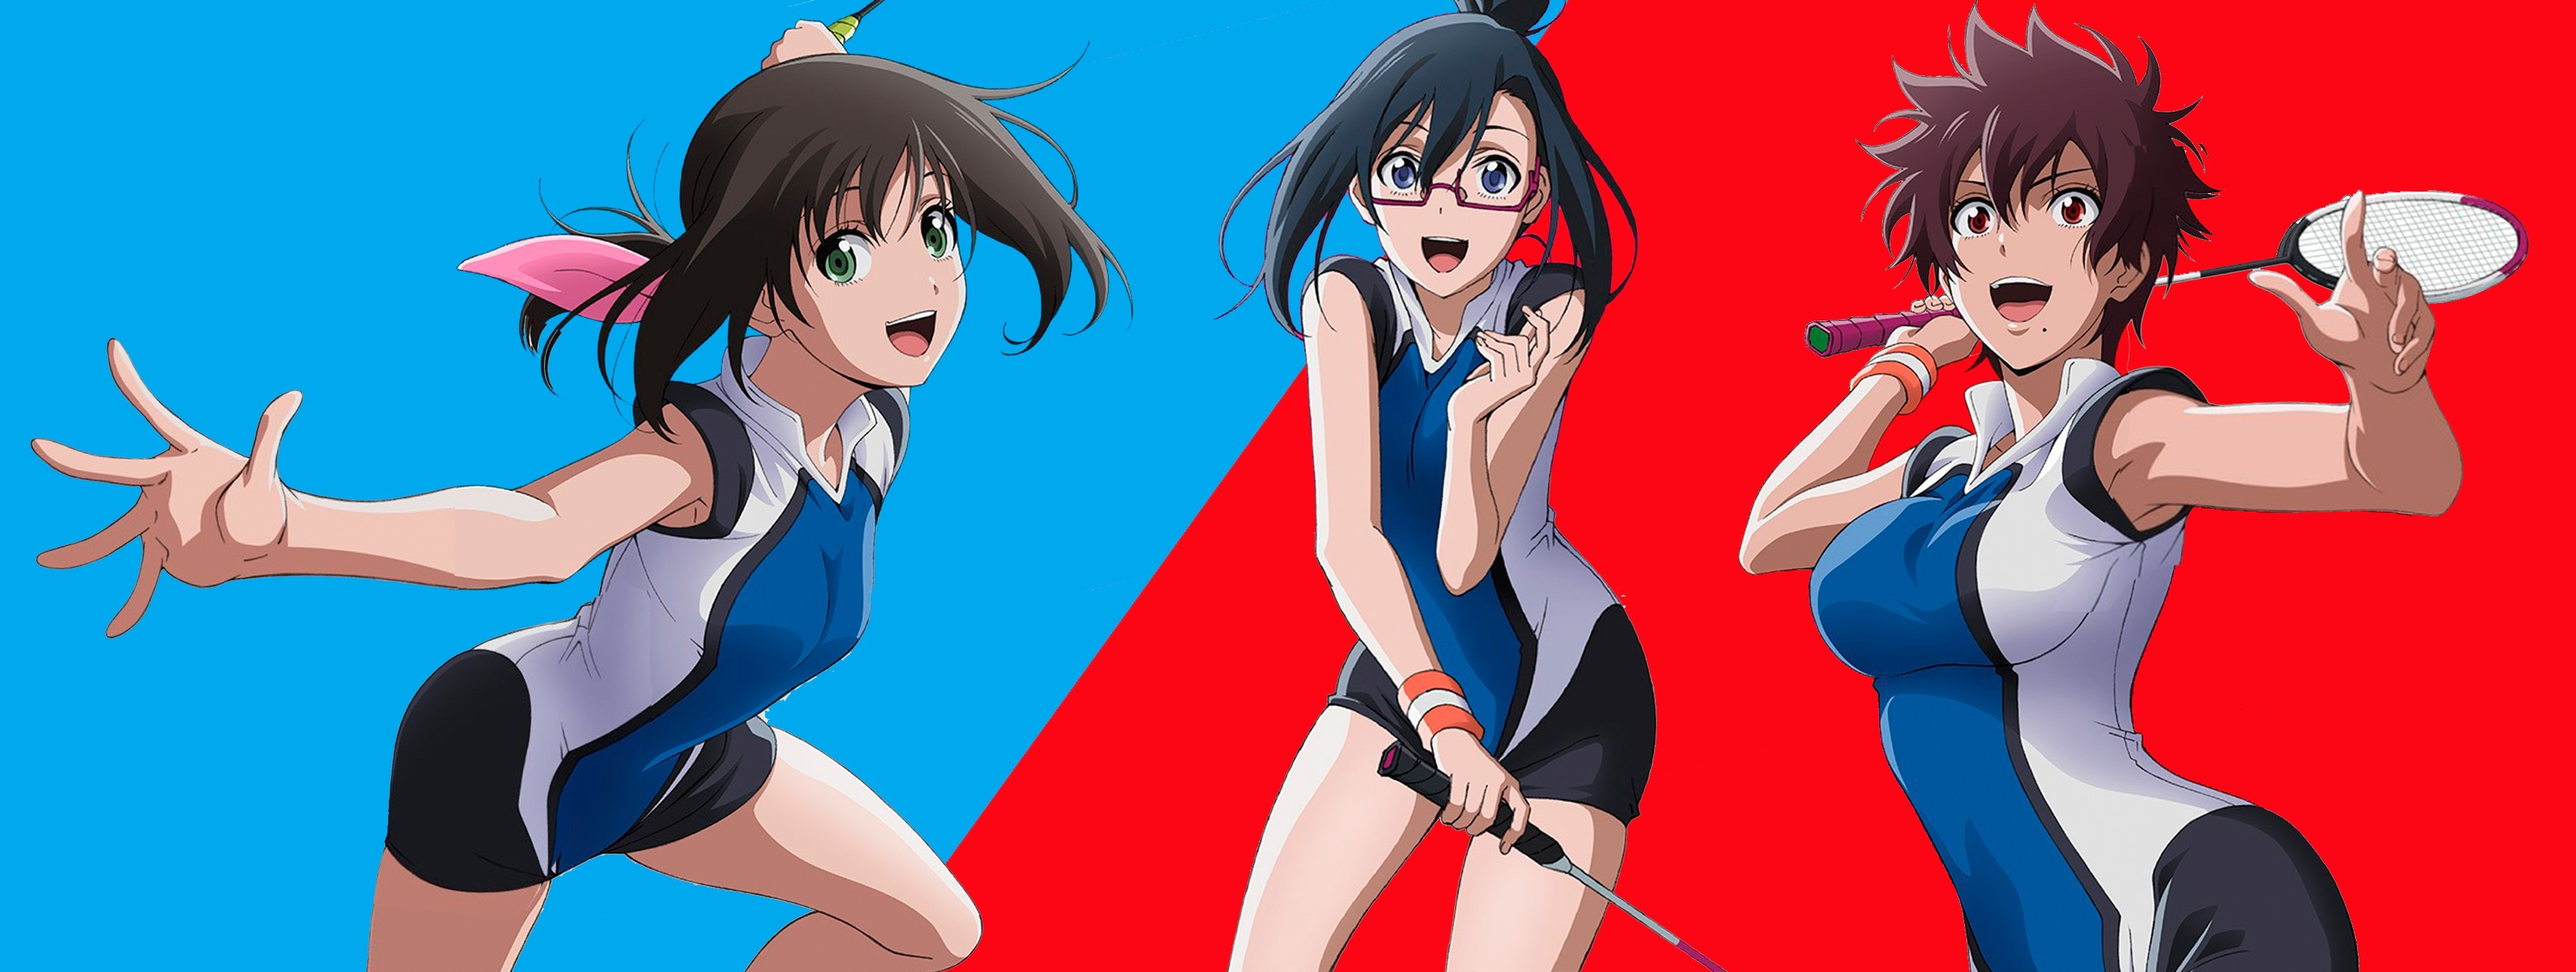 Hanebado! (Anime): Japanese sports manga series by Kosuke Hamada. 3700x1400 Dual Screen Wallpaper.